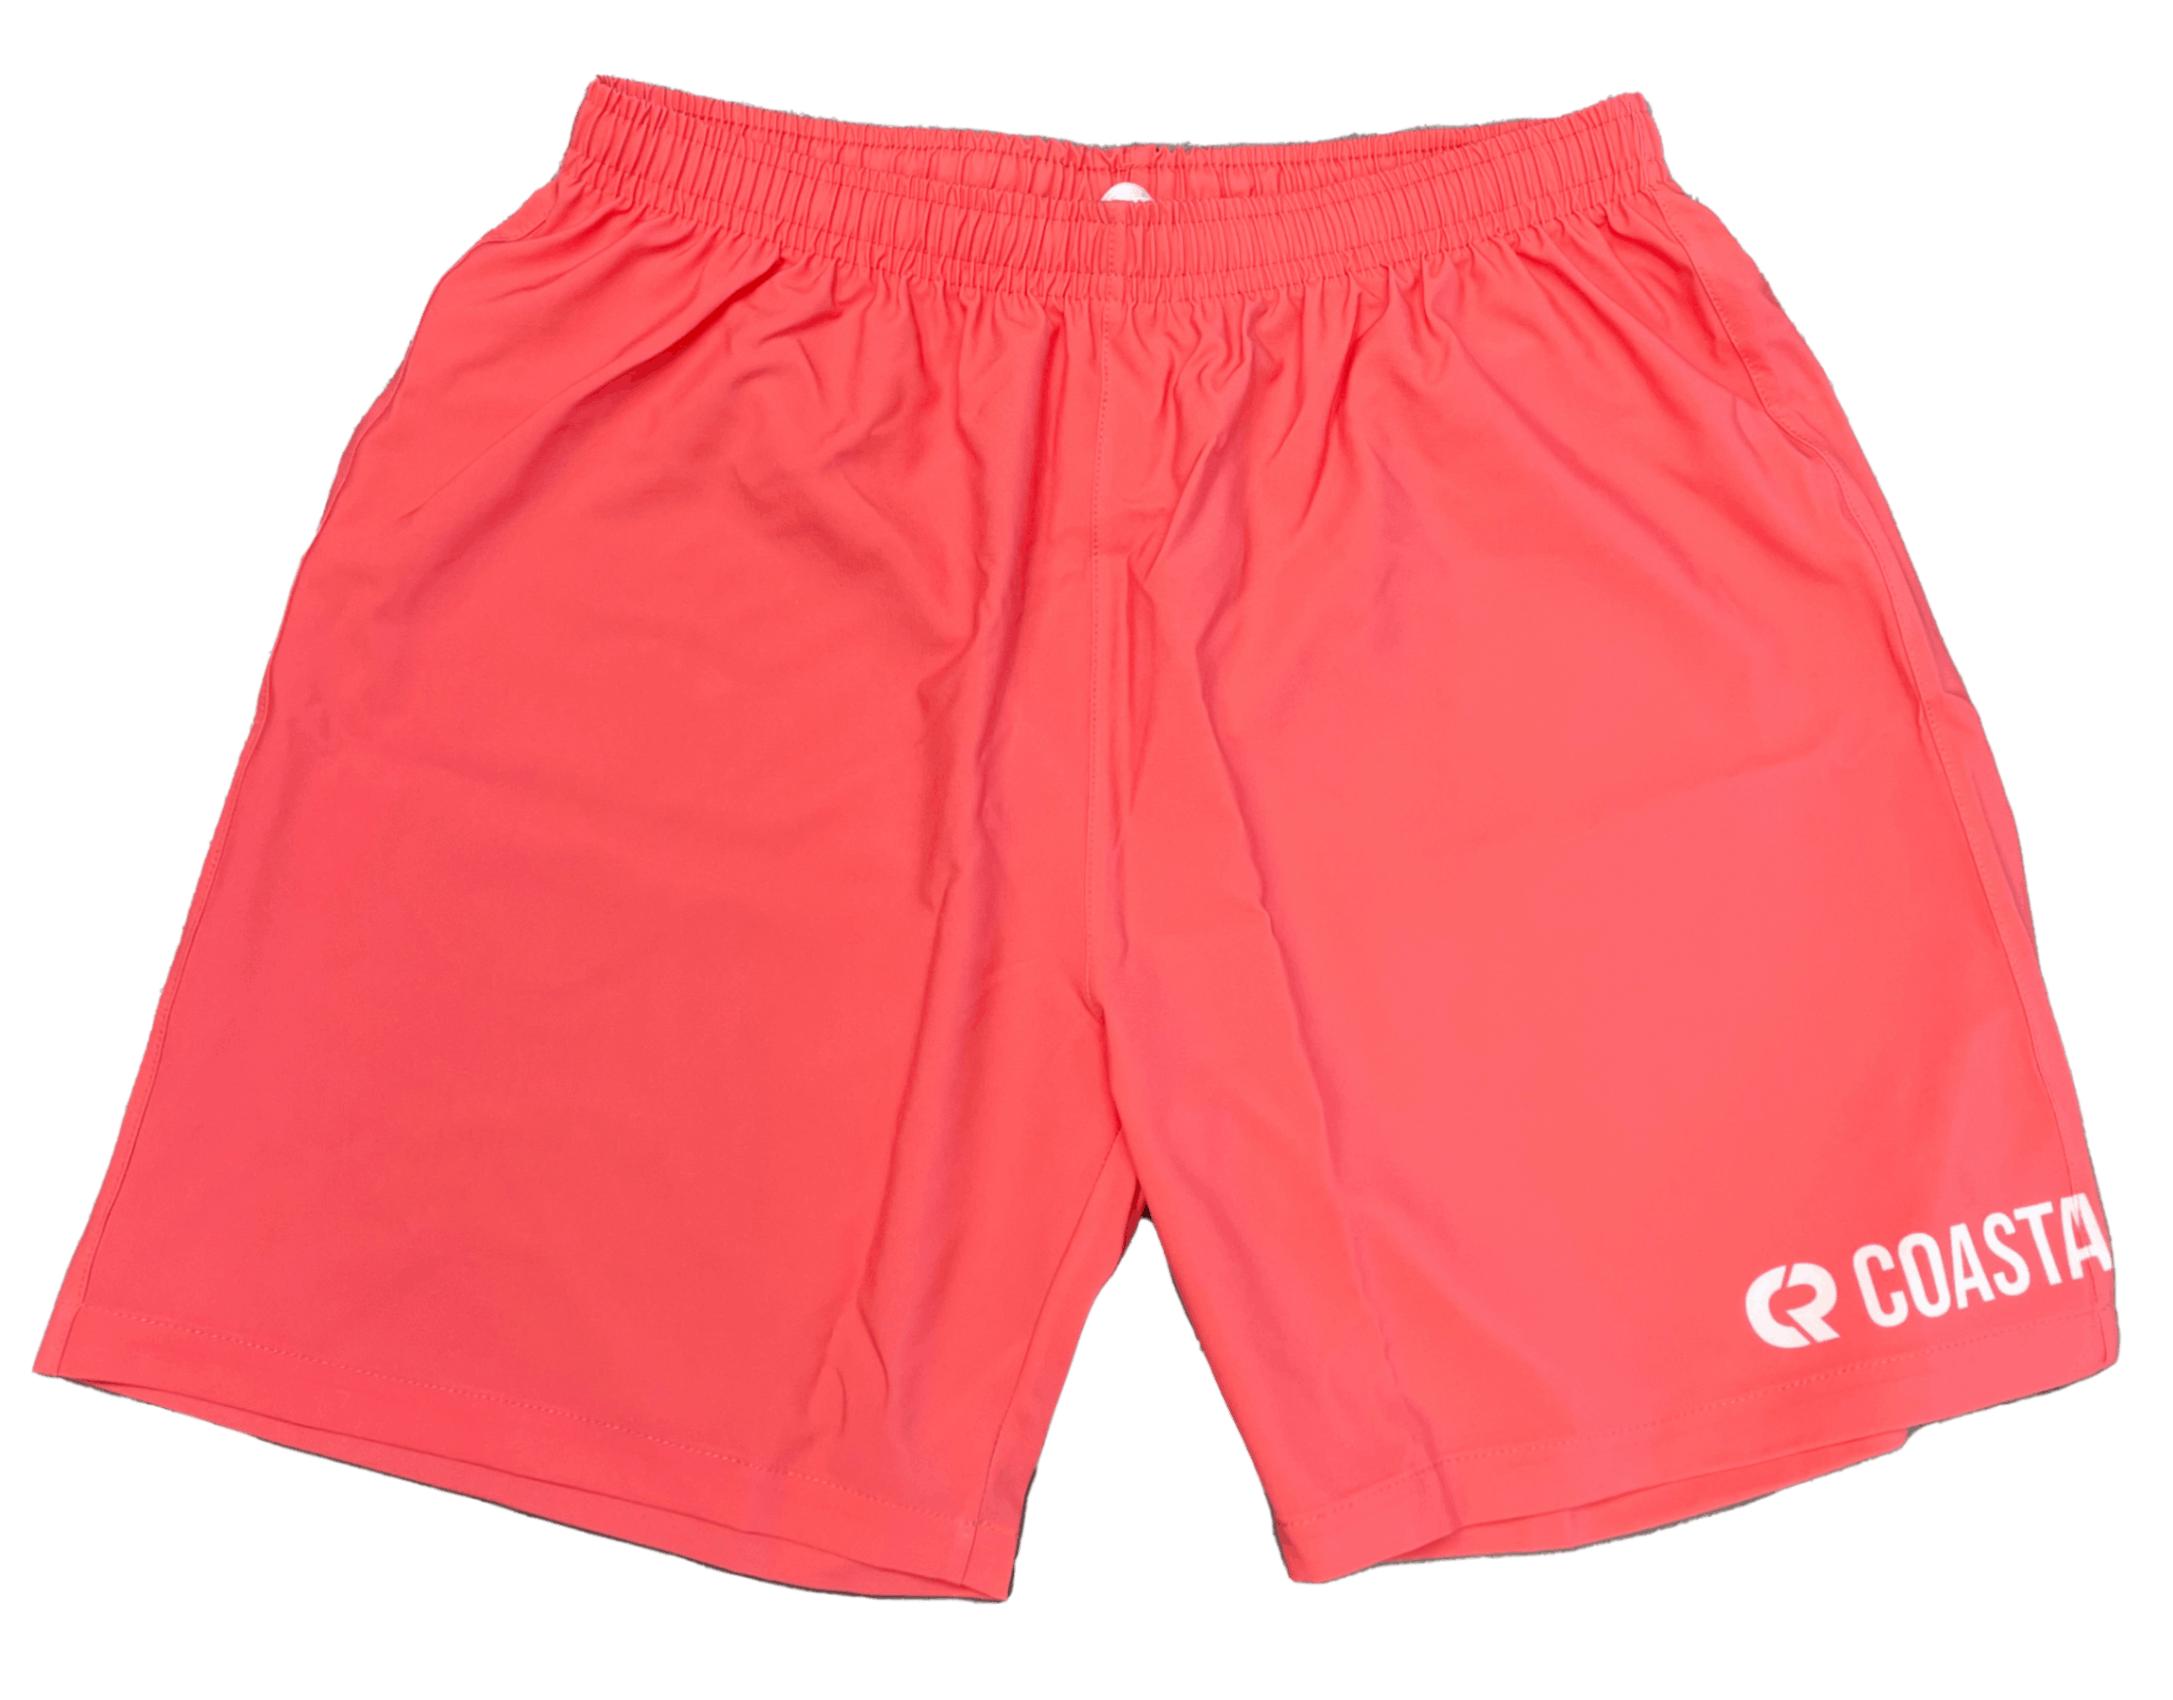 Custom-Printed Shorts for Women